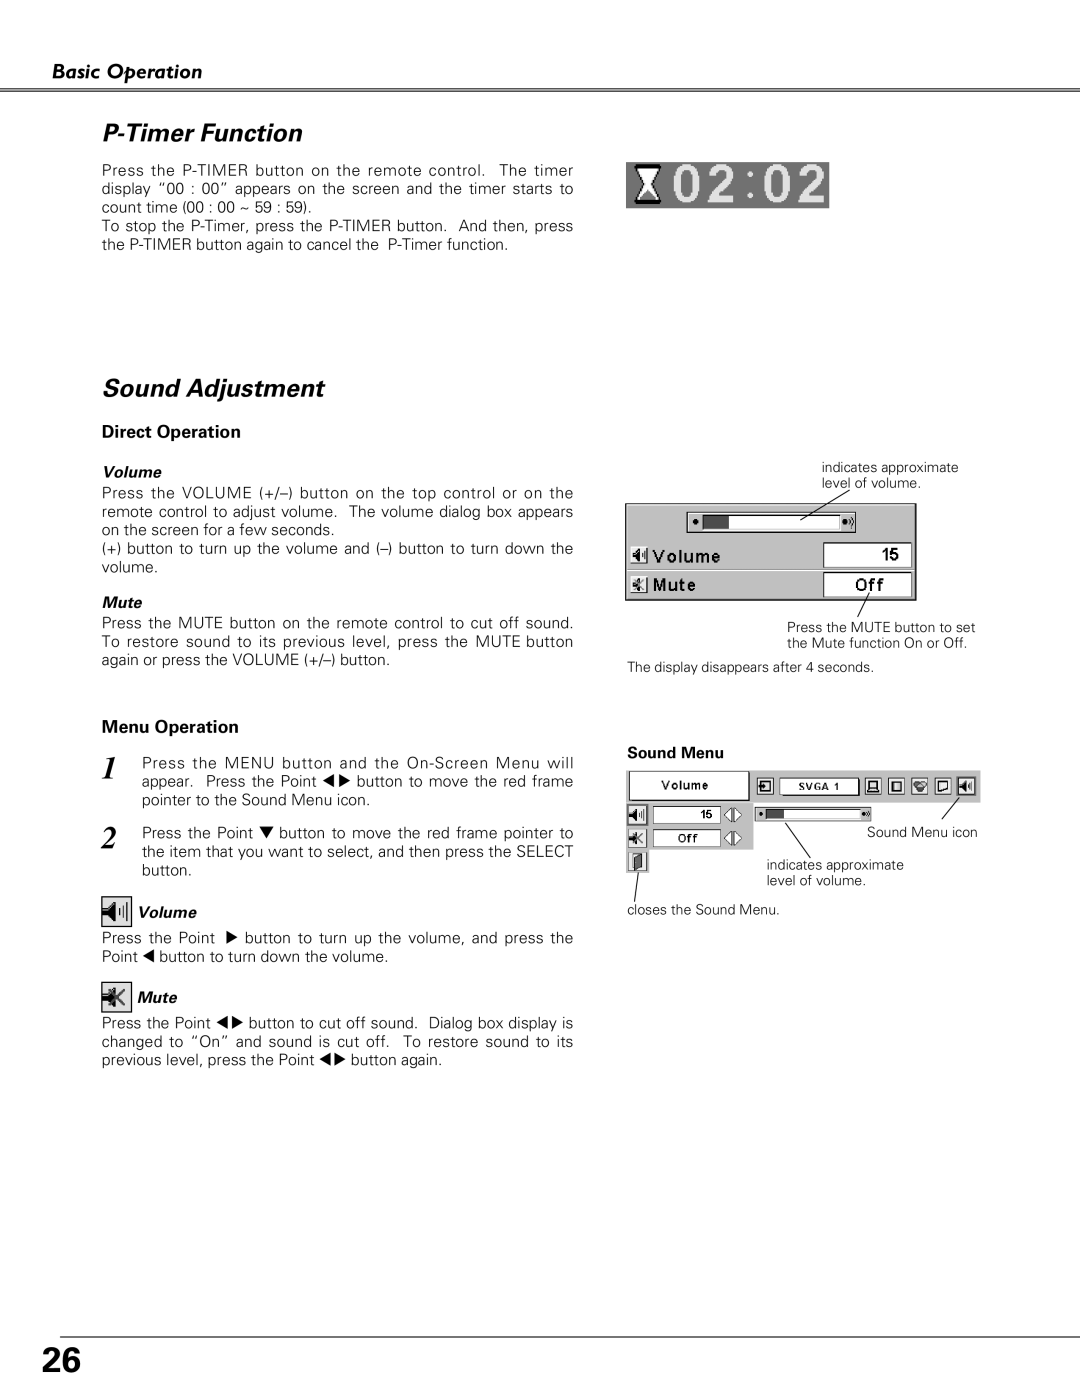 Eiki LC-SB21 owner manual P-TimerFunction, Sound Adjustment, Basic Operation, Volume, Mute, Sound Menu 